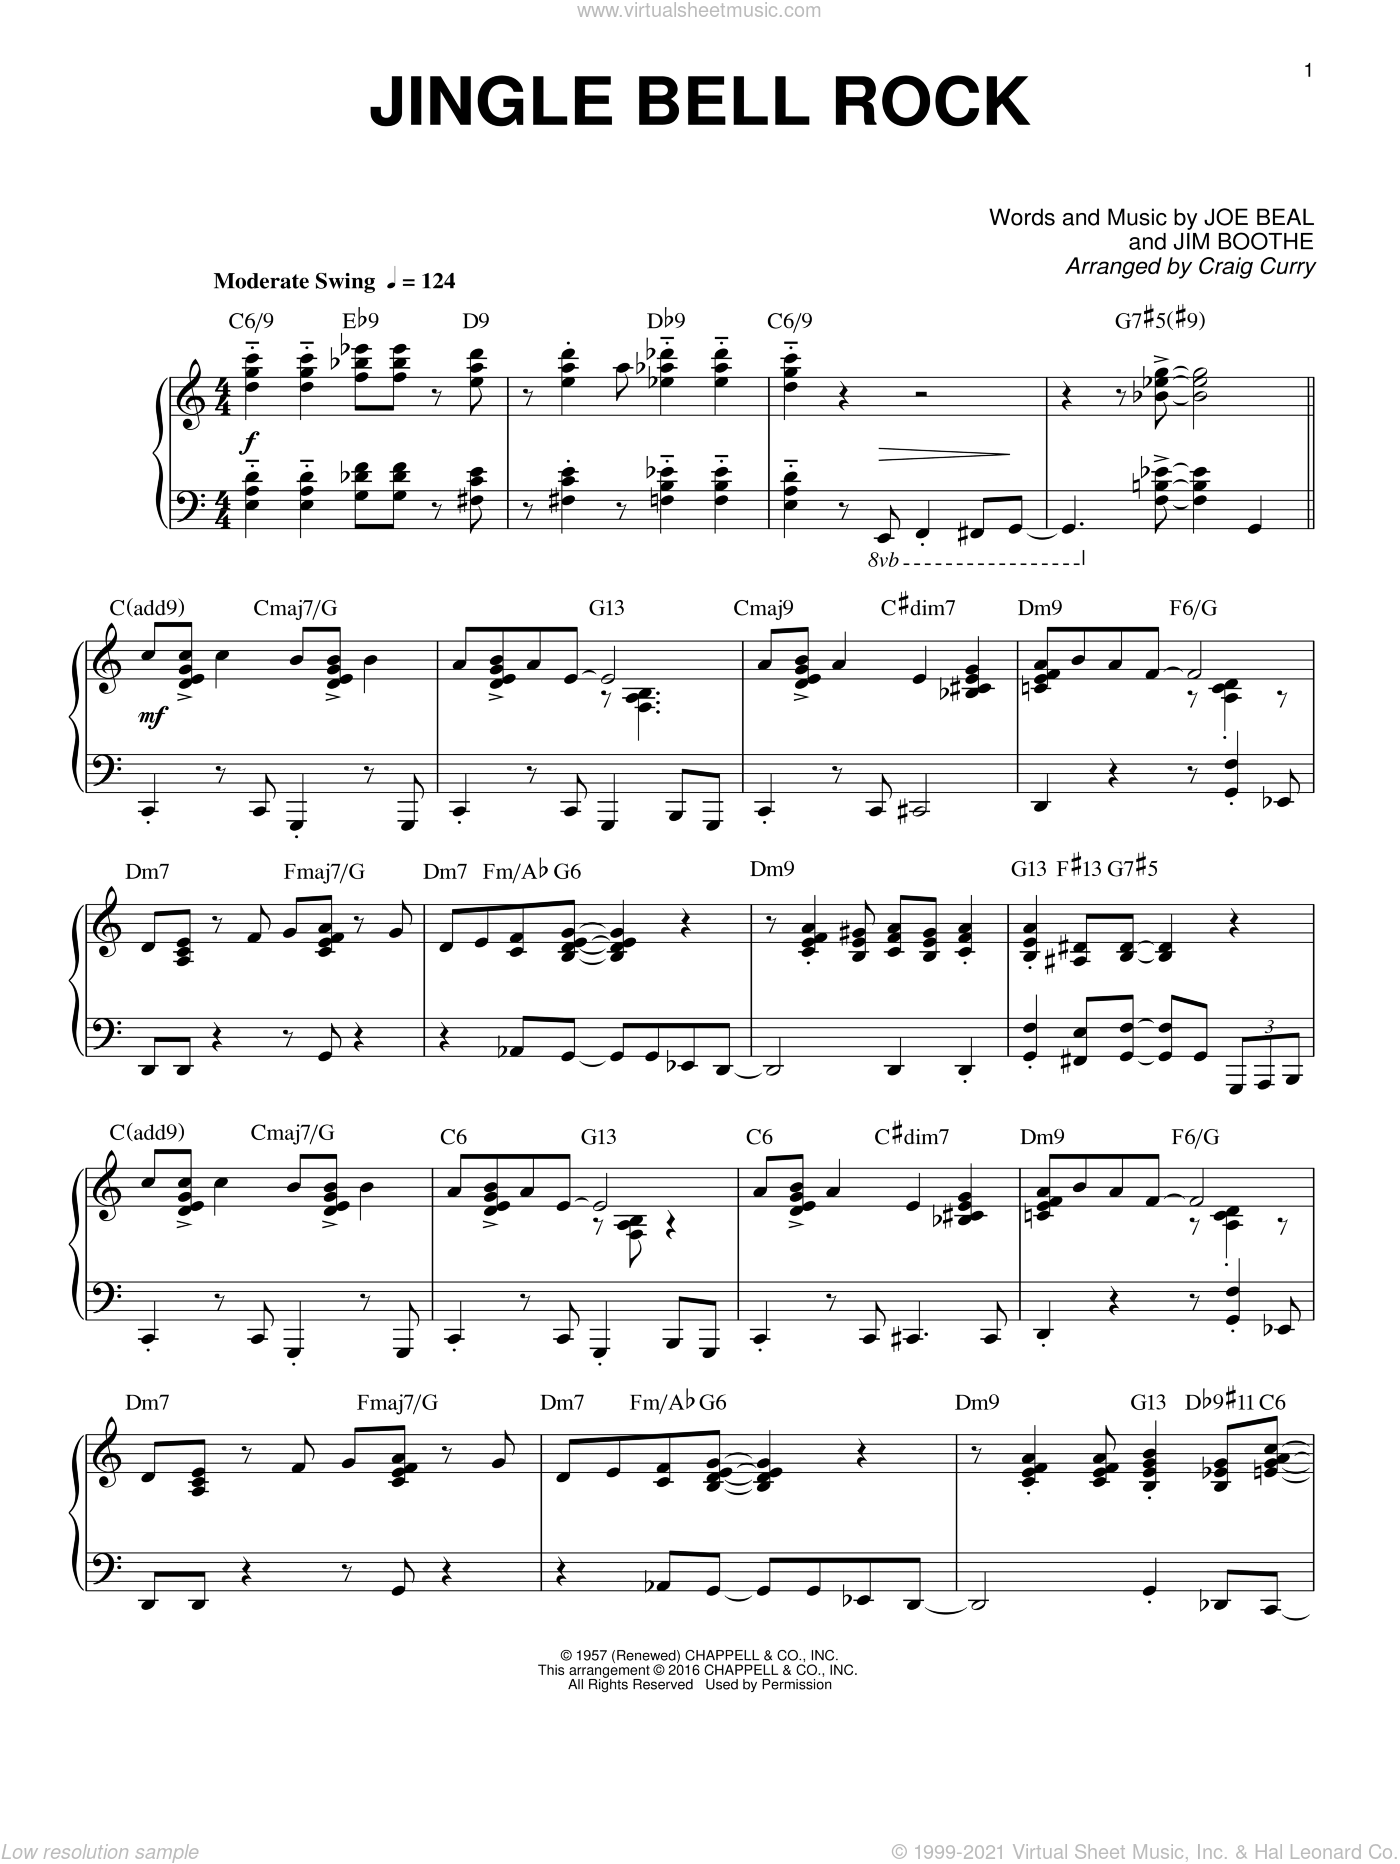 Beal - Jingle Bell Rock sheet music for piano solo [PDF]